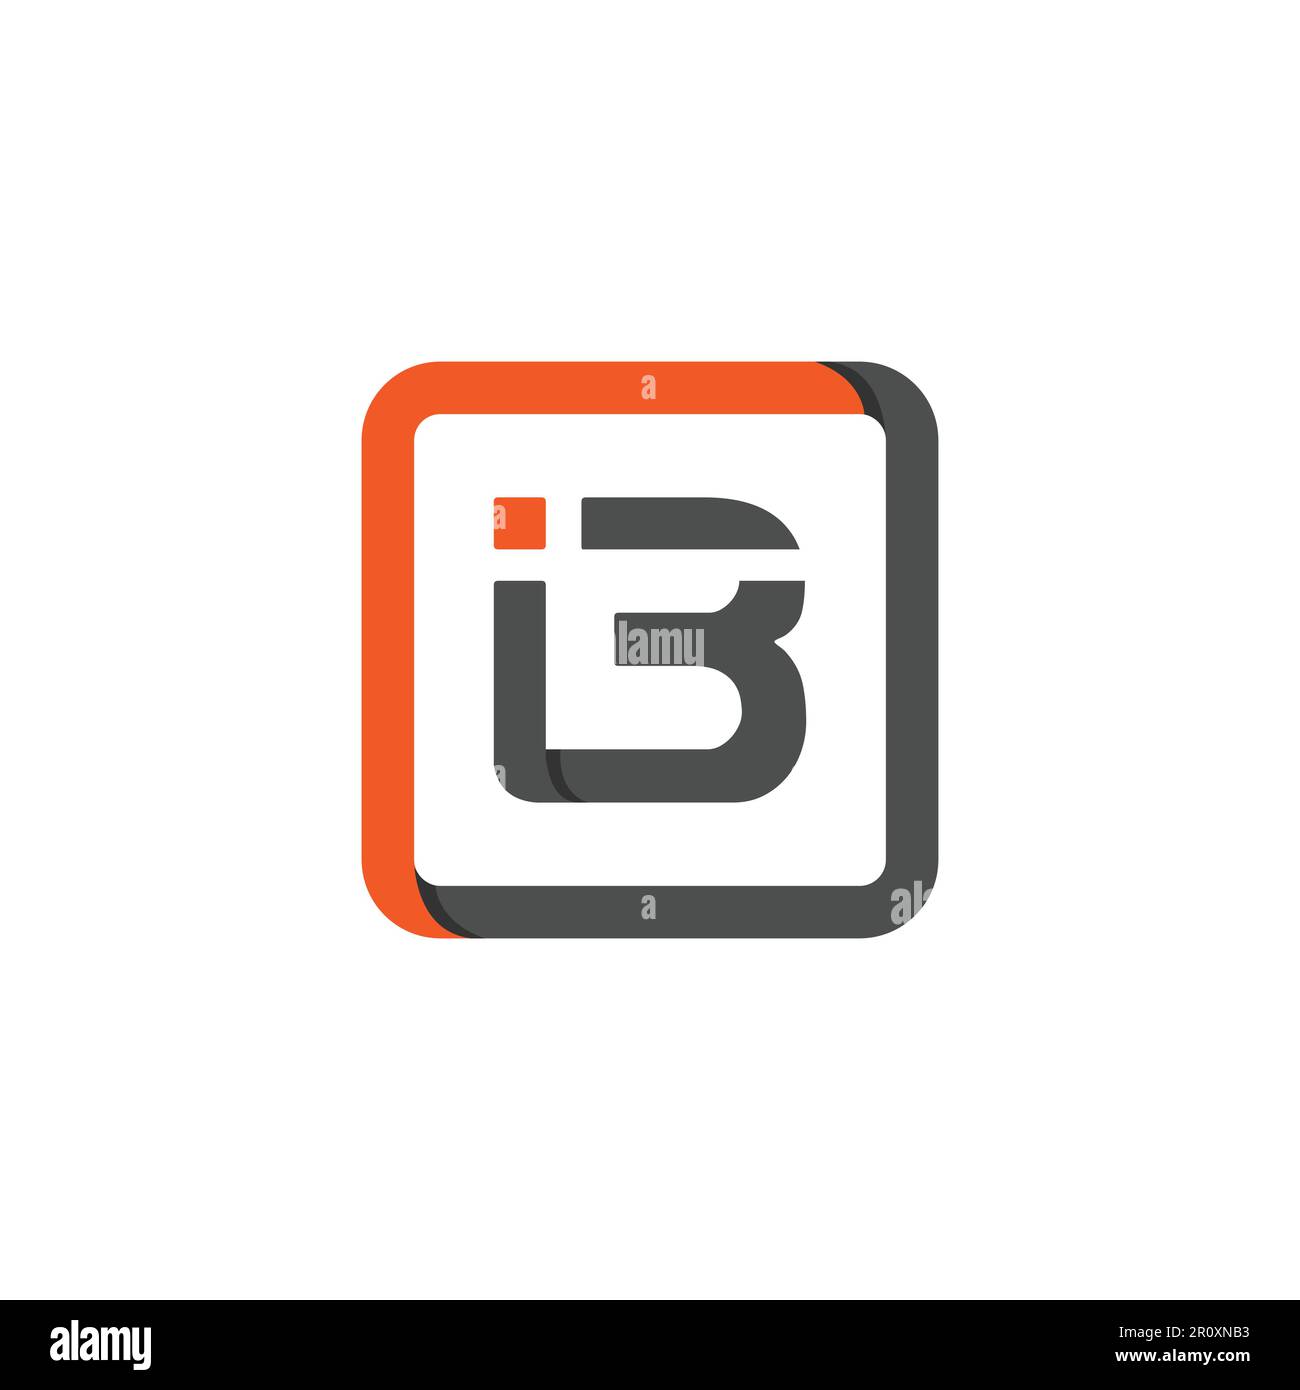 i3 creative modern logo design concept. Combination of letter i with number 3 symbol inside of square shape Stock Vector